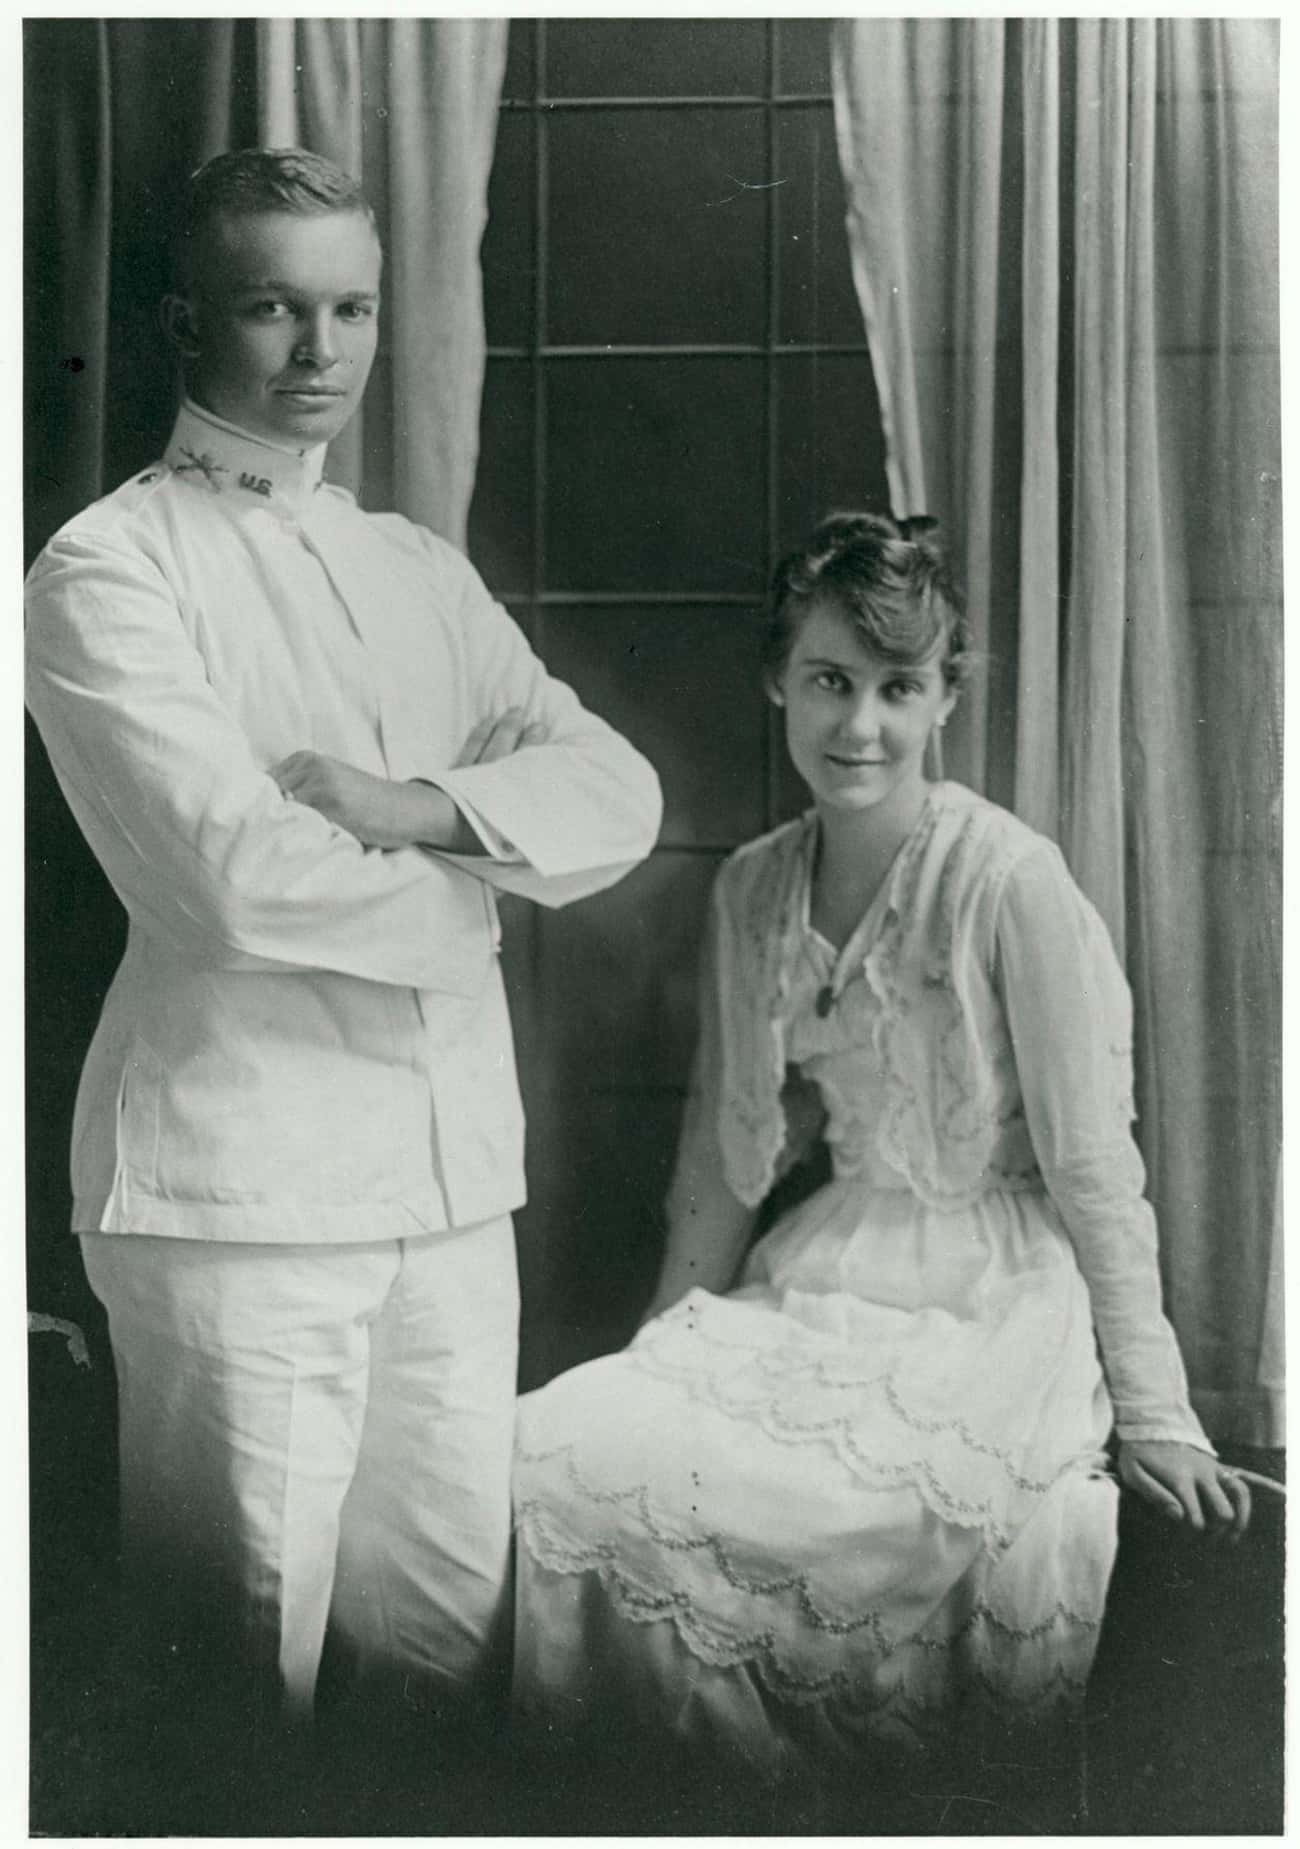 Dwight And Mamie Eisenhower, 1916